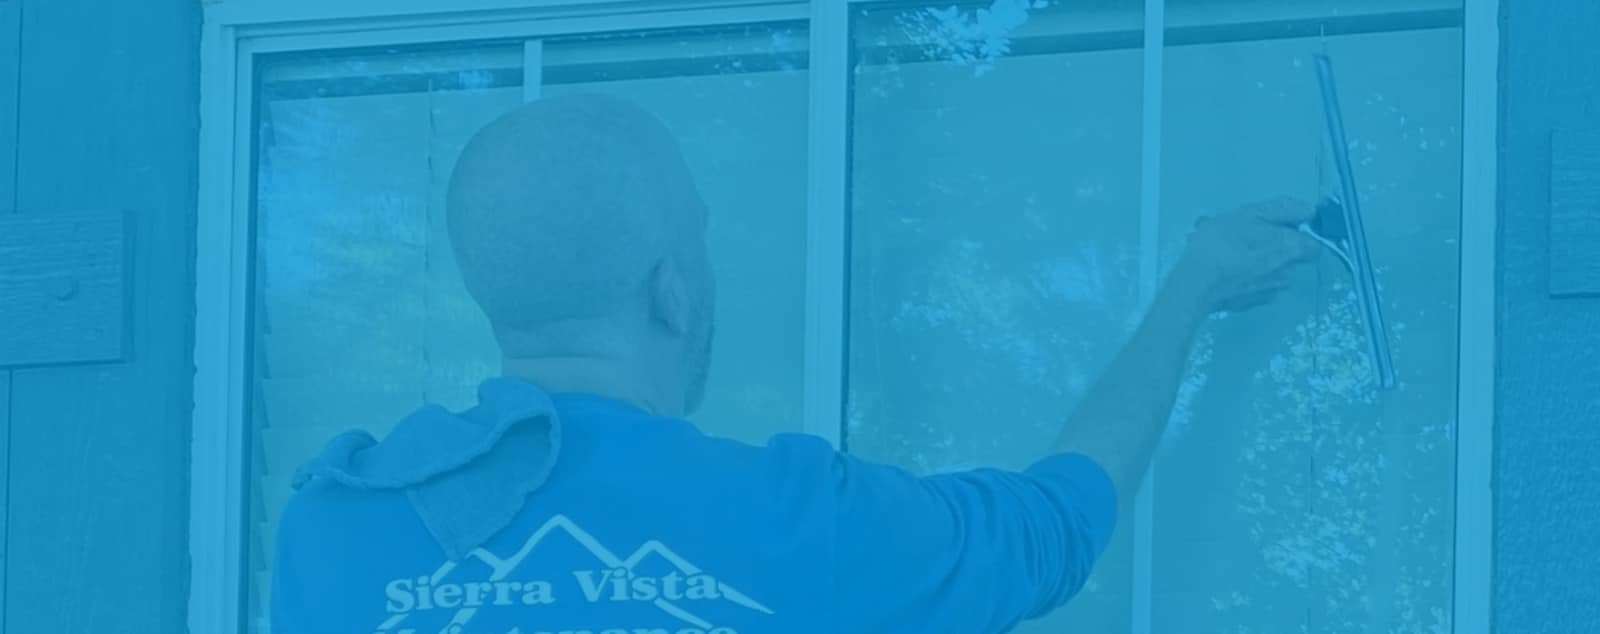 Sacramento CA Window Cleaning Sierra Vista Maintenance Sacramento CA Cleaning Company